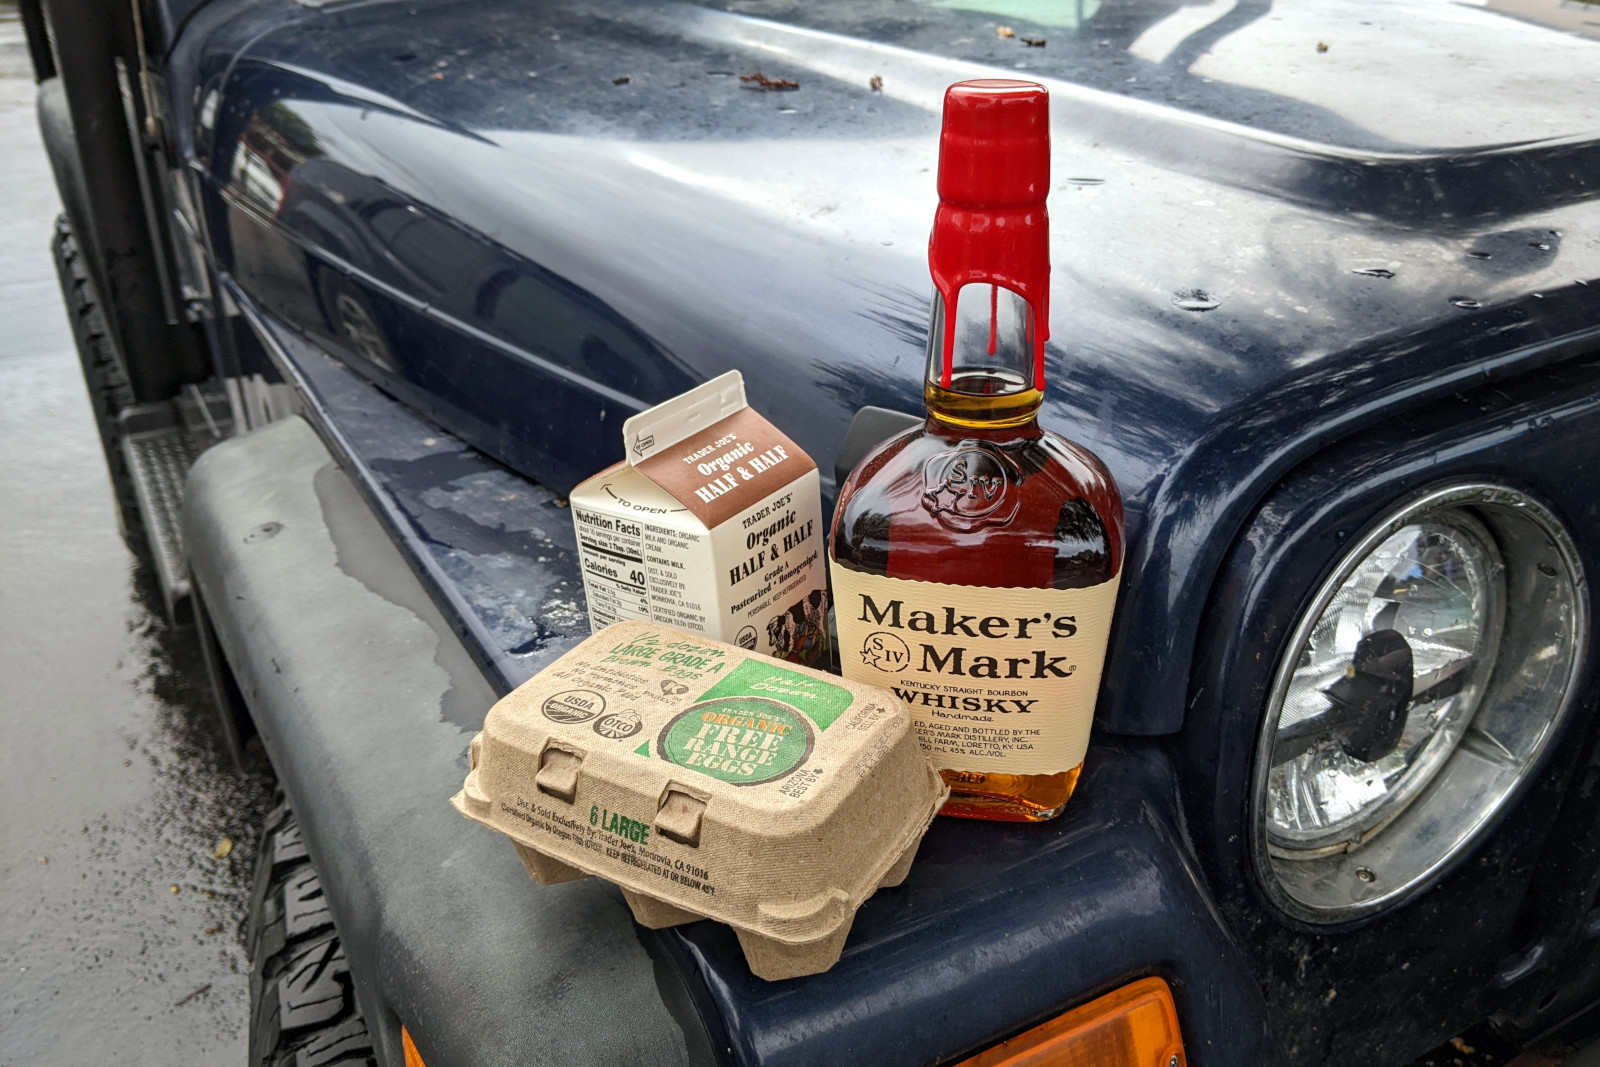 Ingredients for a batch of aged eggnog (Maker's Mark bourbon, half-and-half, eggs) sitting on Jeep fender